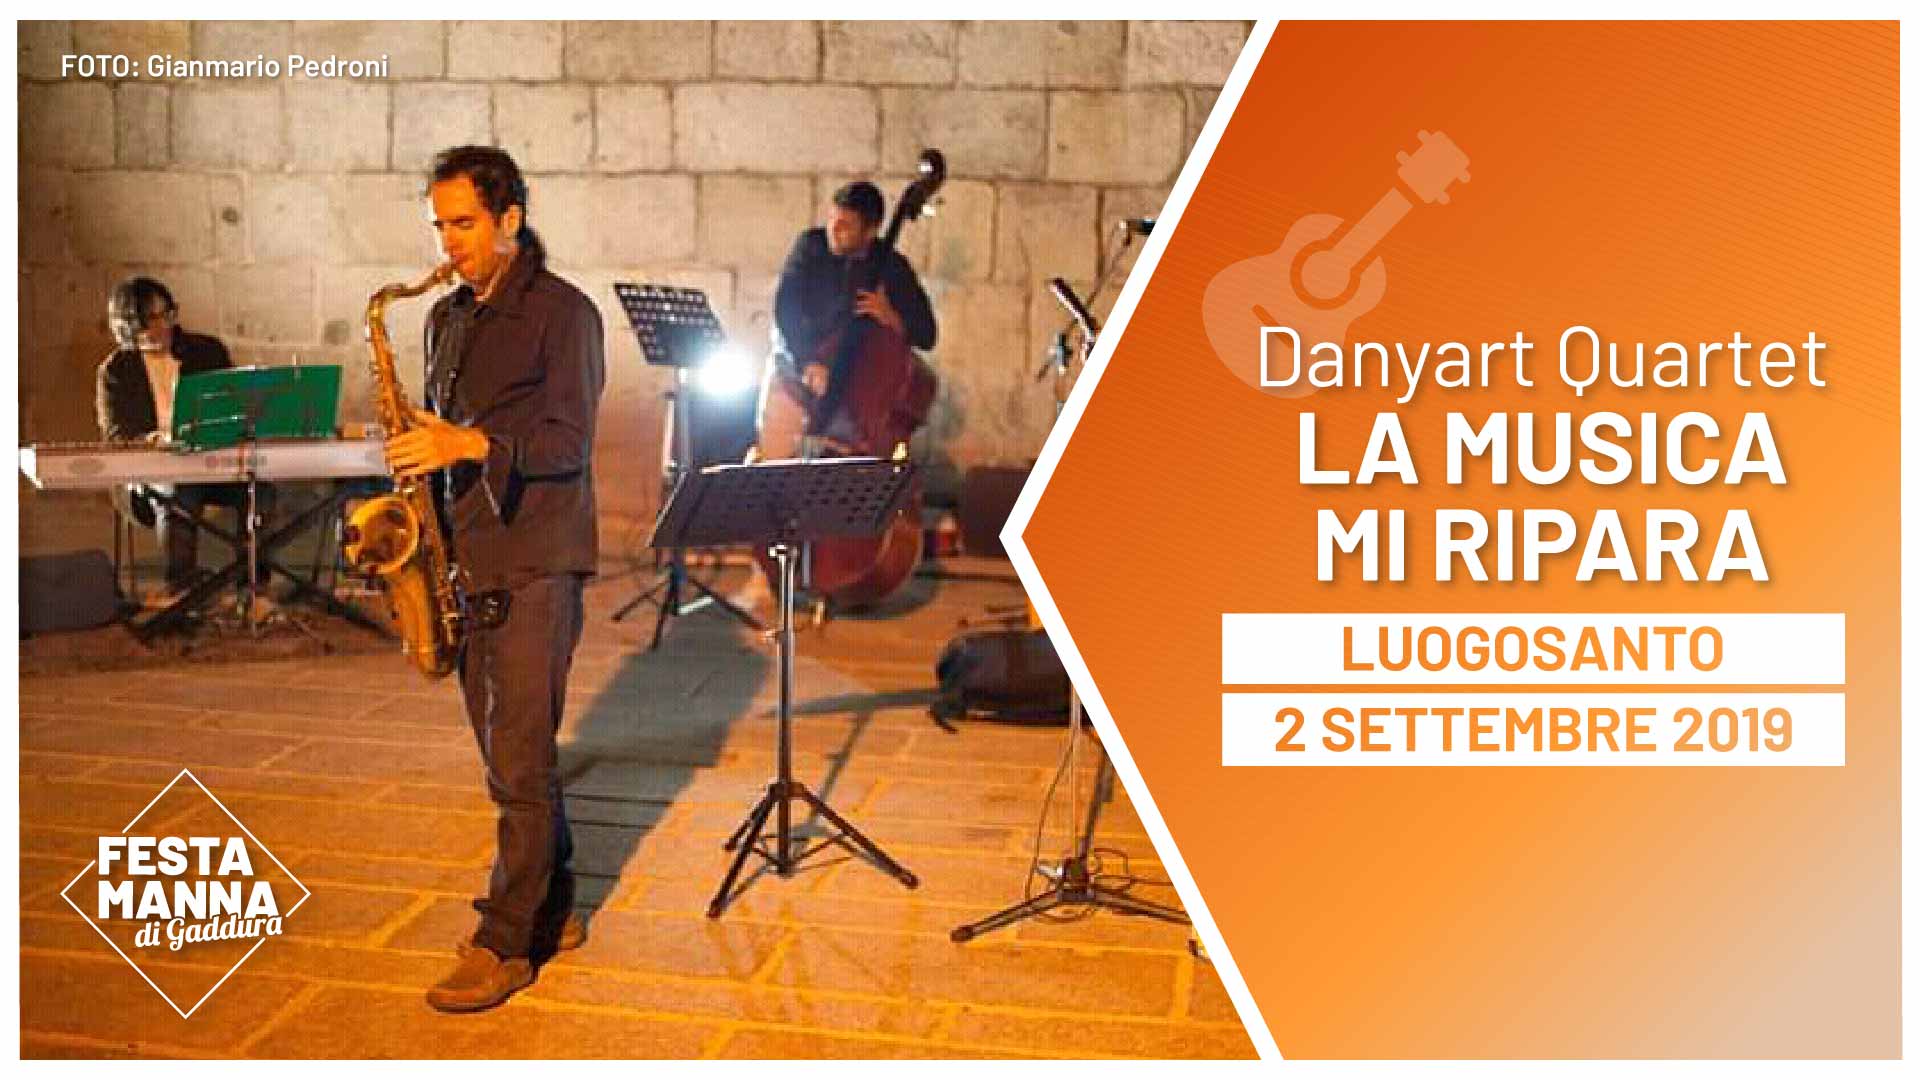 “La musica mi ripara”, Danyart Quartet jazz concert | Festa Manna di Gaddura 2019